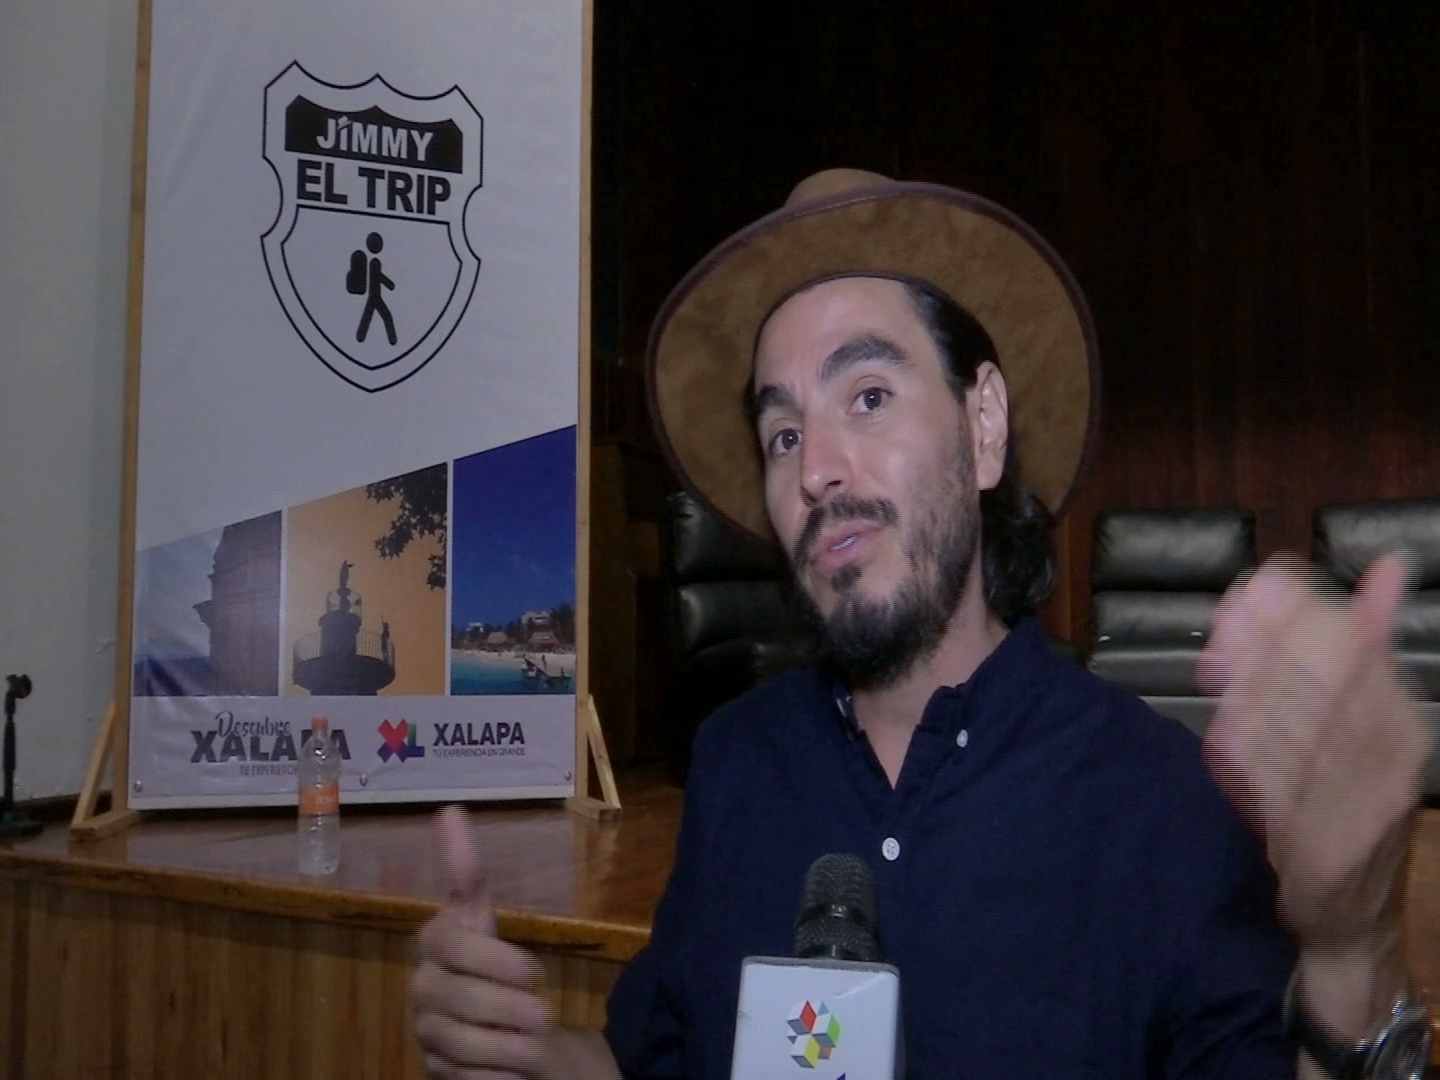 Xalapa llegará a México Travel Channel con Jimmy el Trip